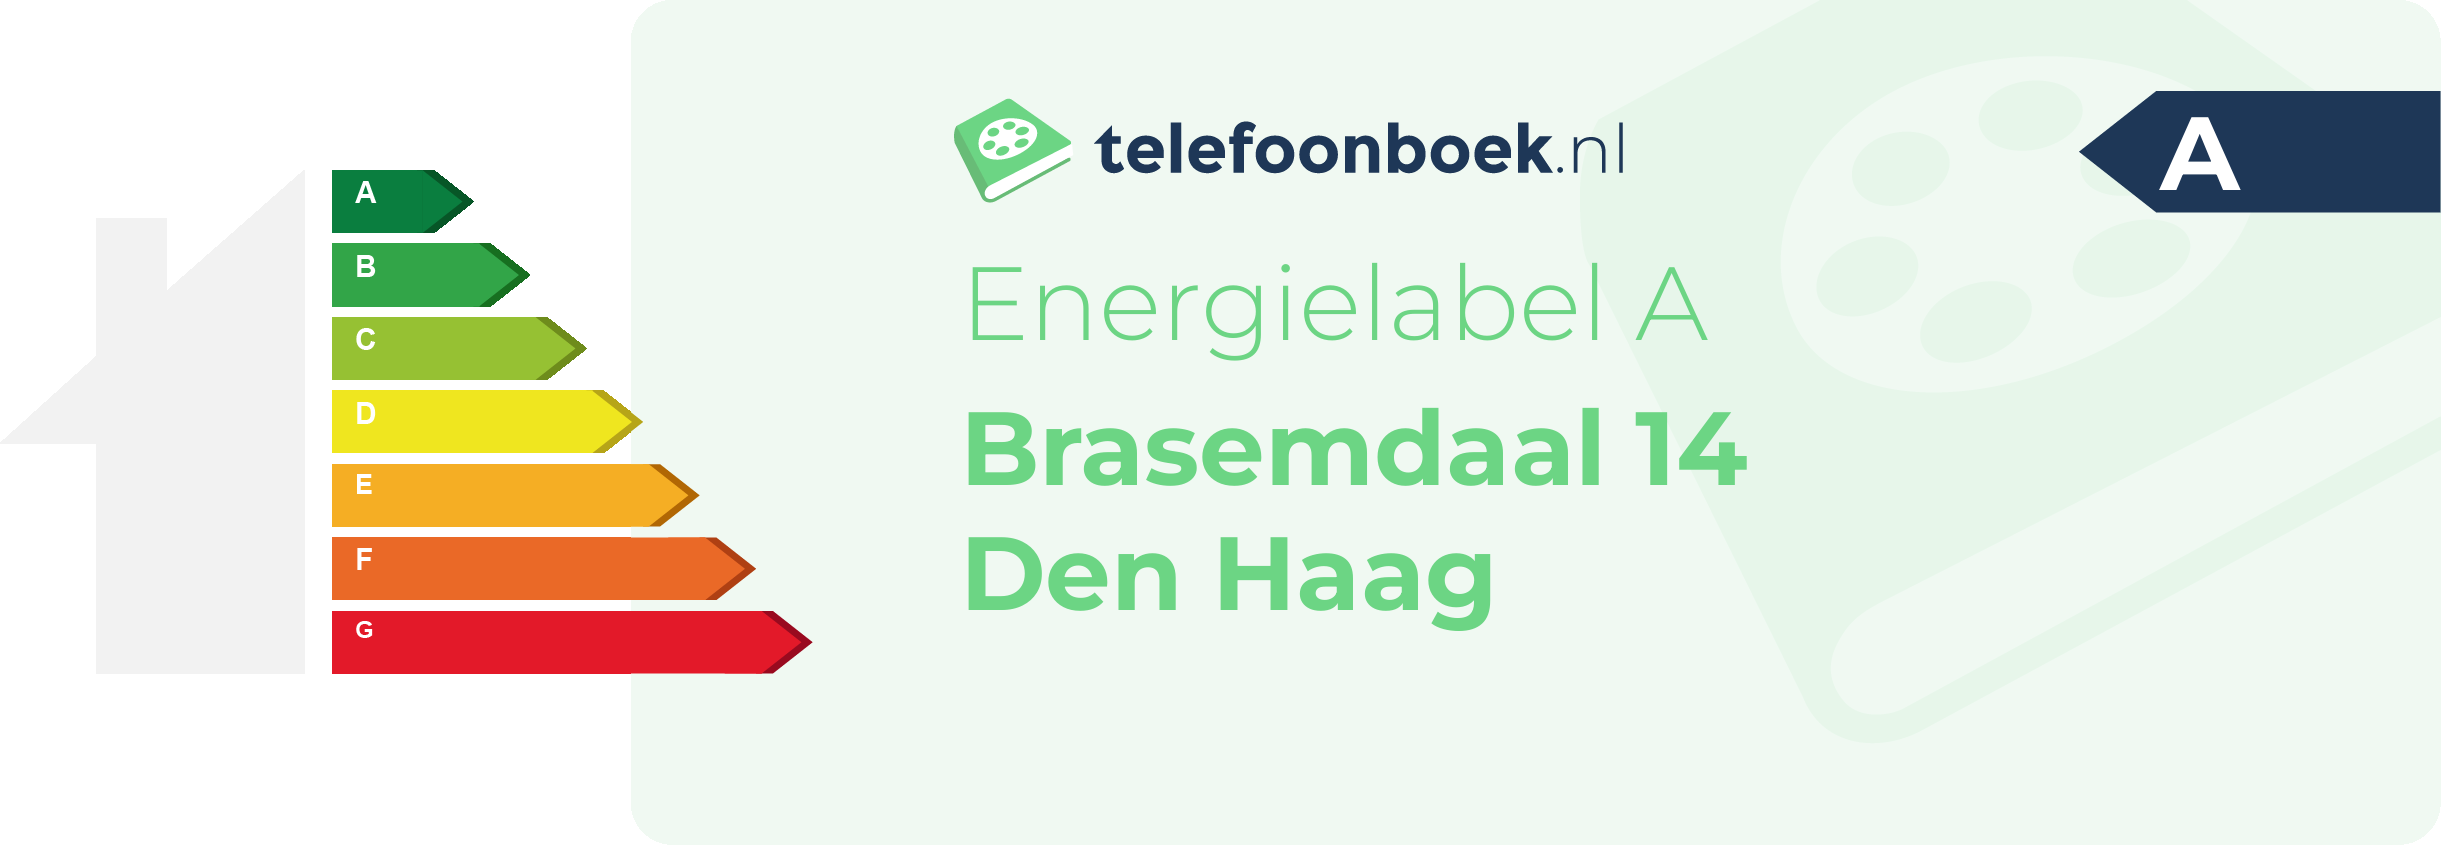 Energielabel Brasemdaal 14 Den Haag